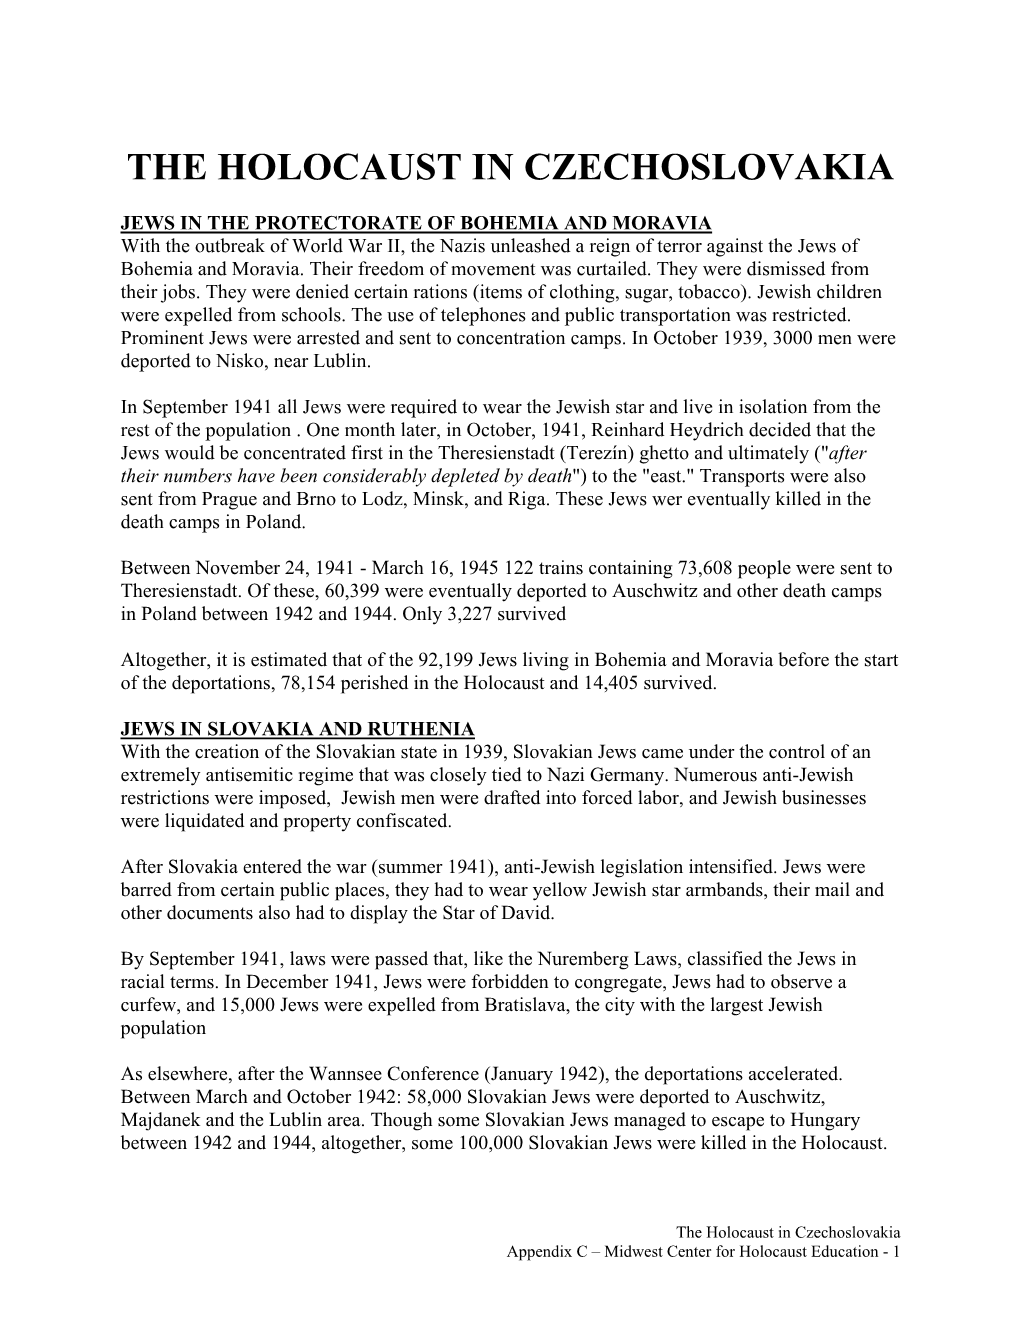 The Holocaust in Czechoslovakia